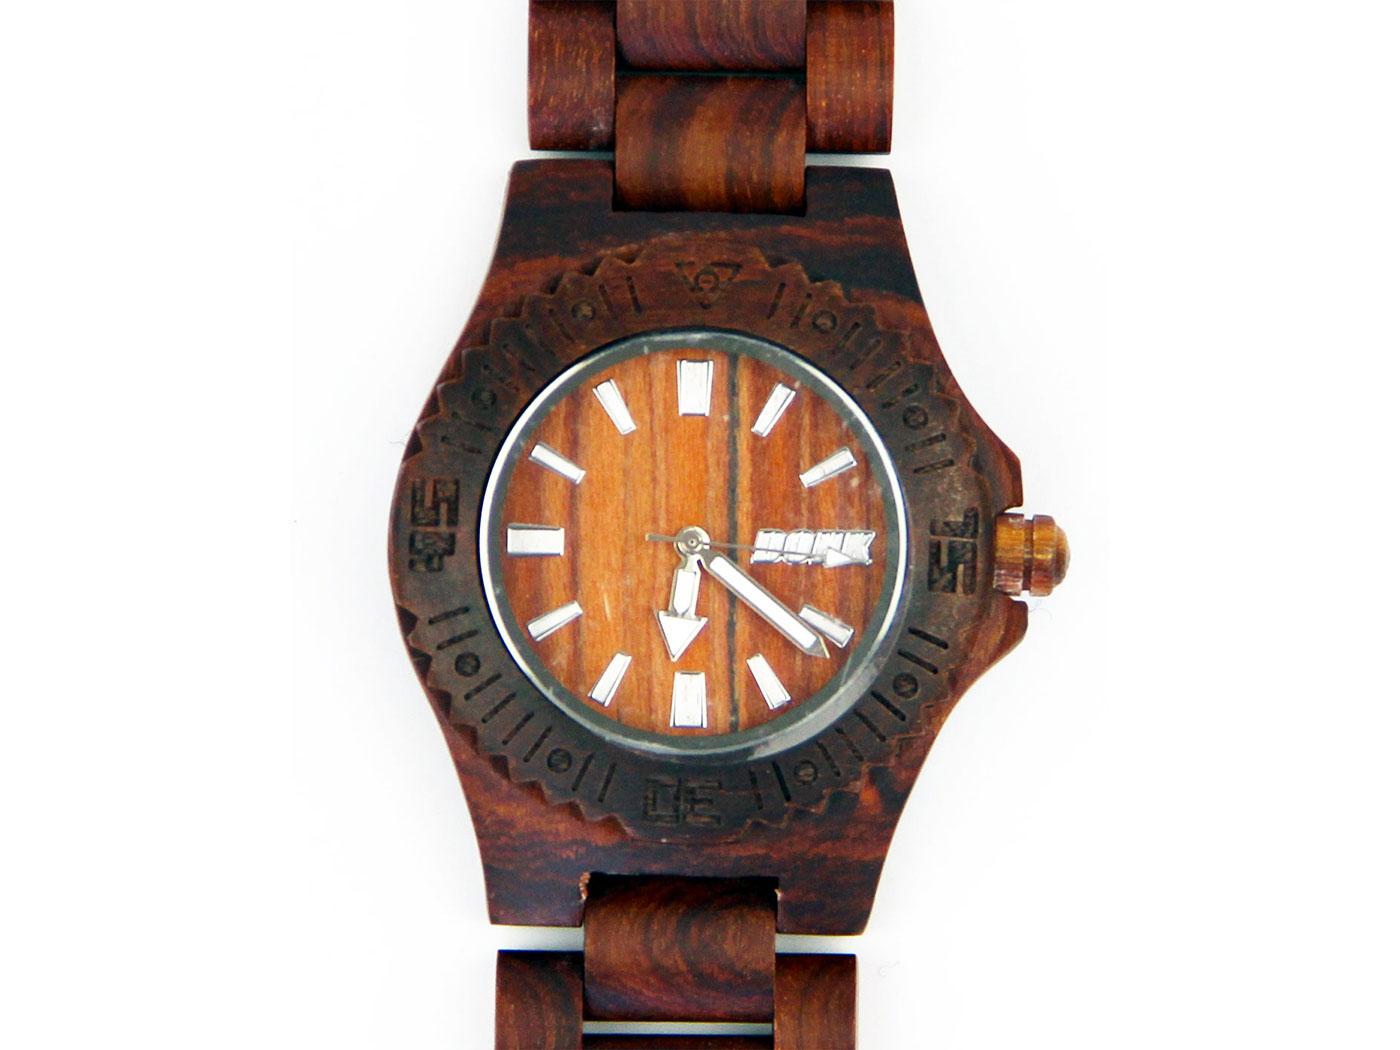 DONK Wood Watch in Classic Retro Dark Brown DK02